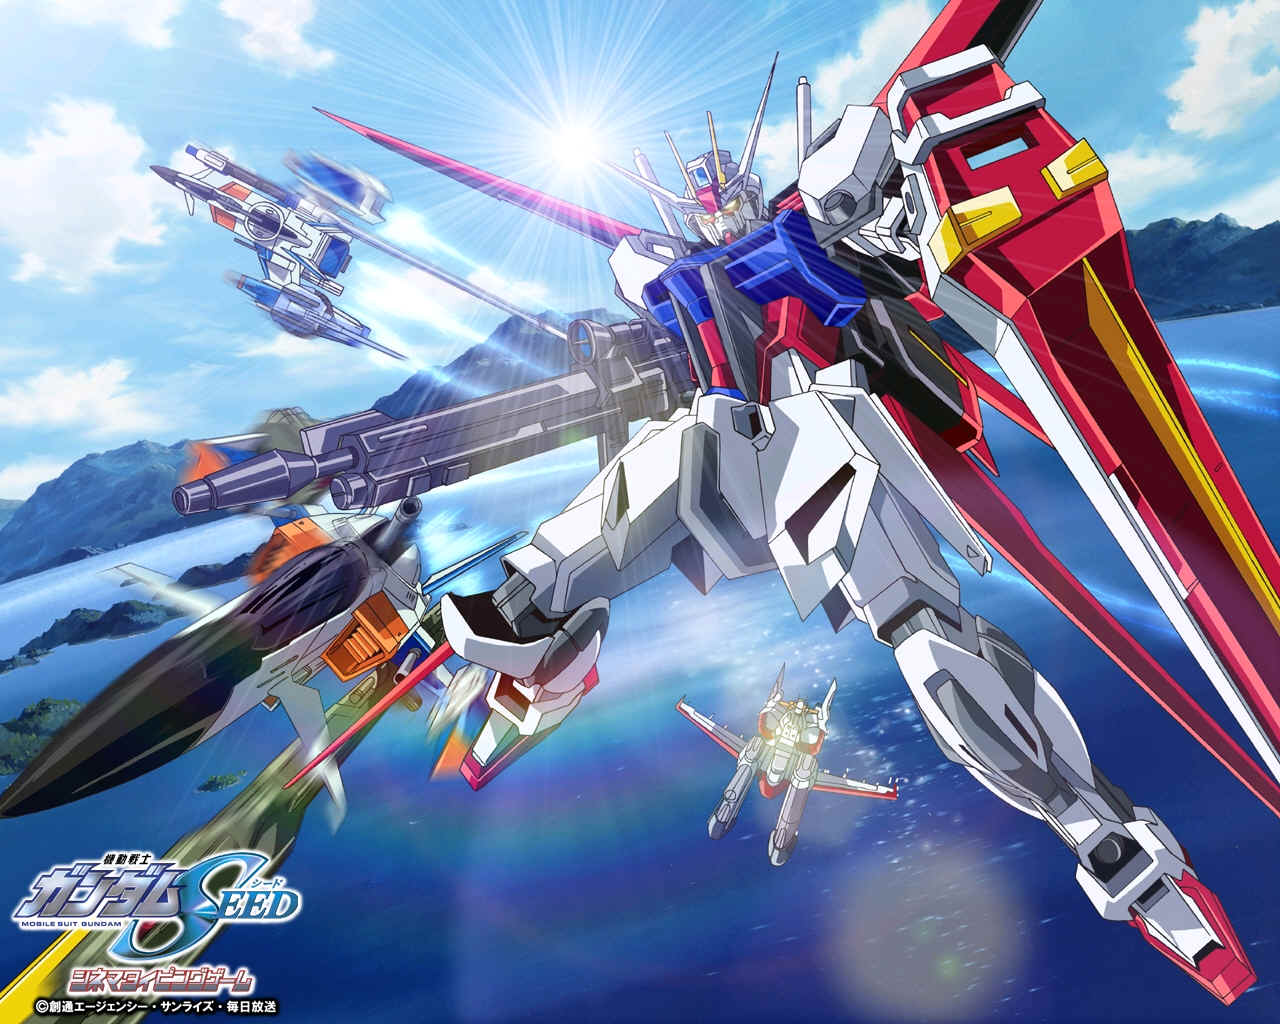 Download this Gundam picture